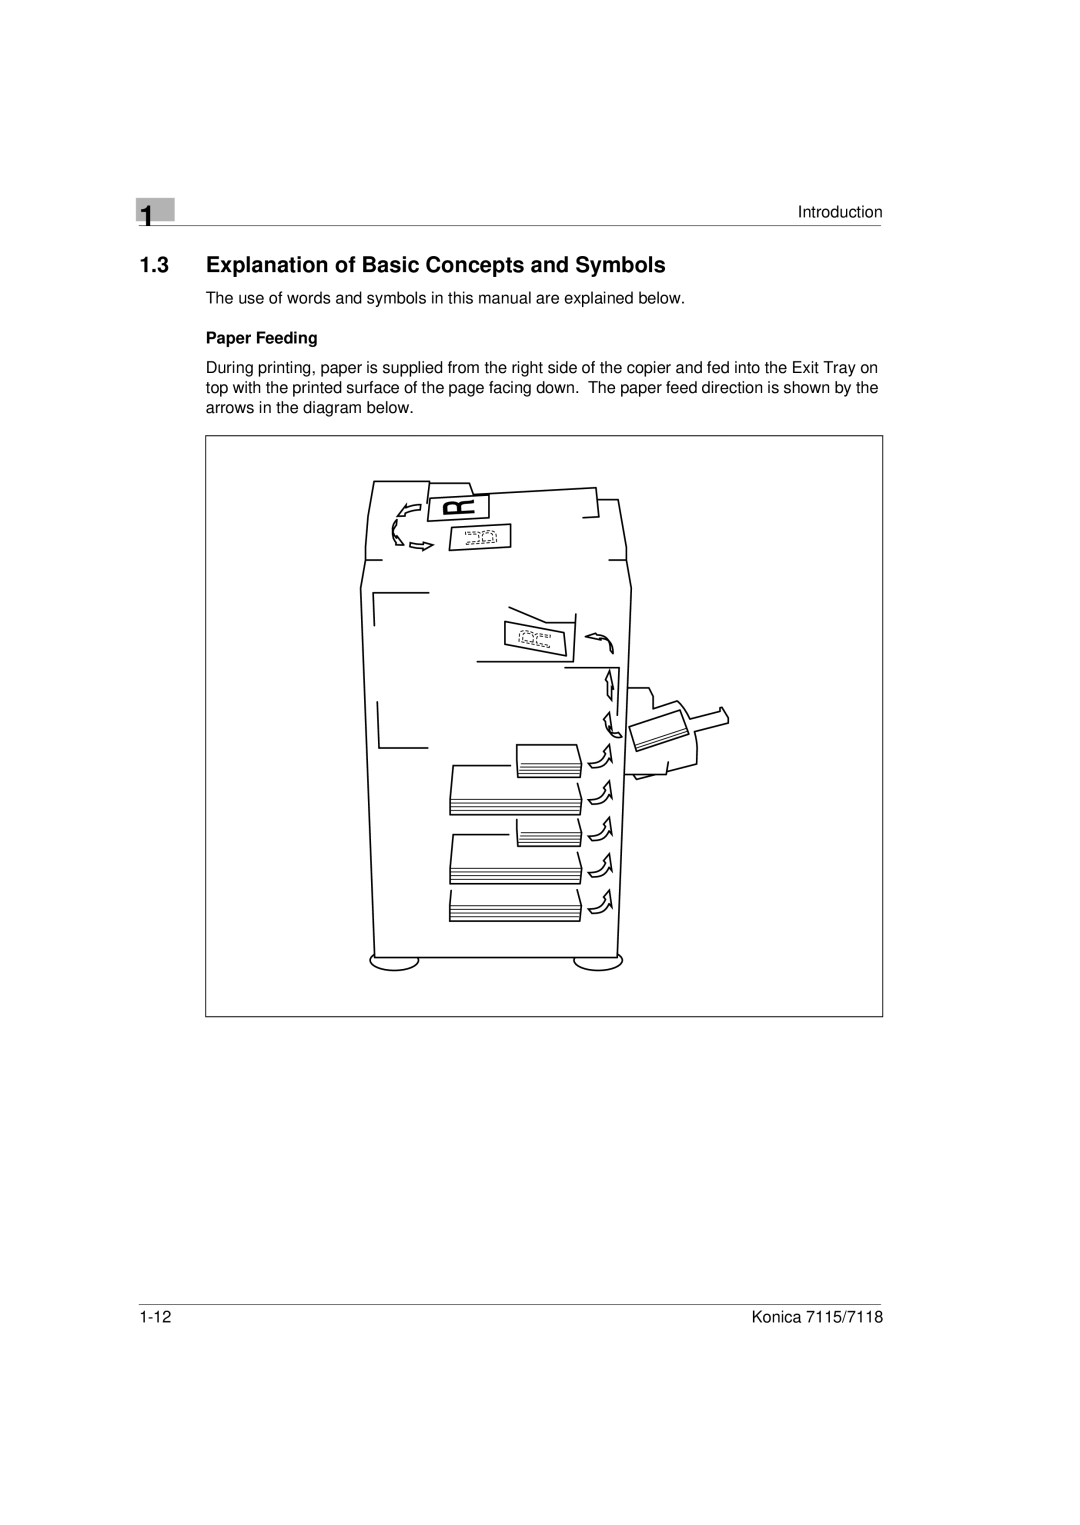 Konica Minolta Printer Copier manual Explanation of Basic Concepts and Symbols, Paper Feeding 